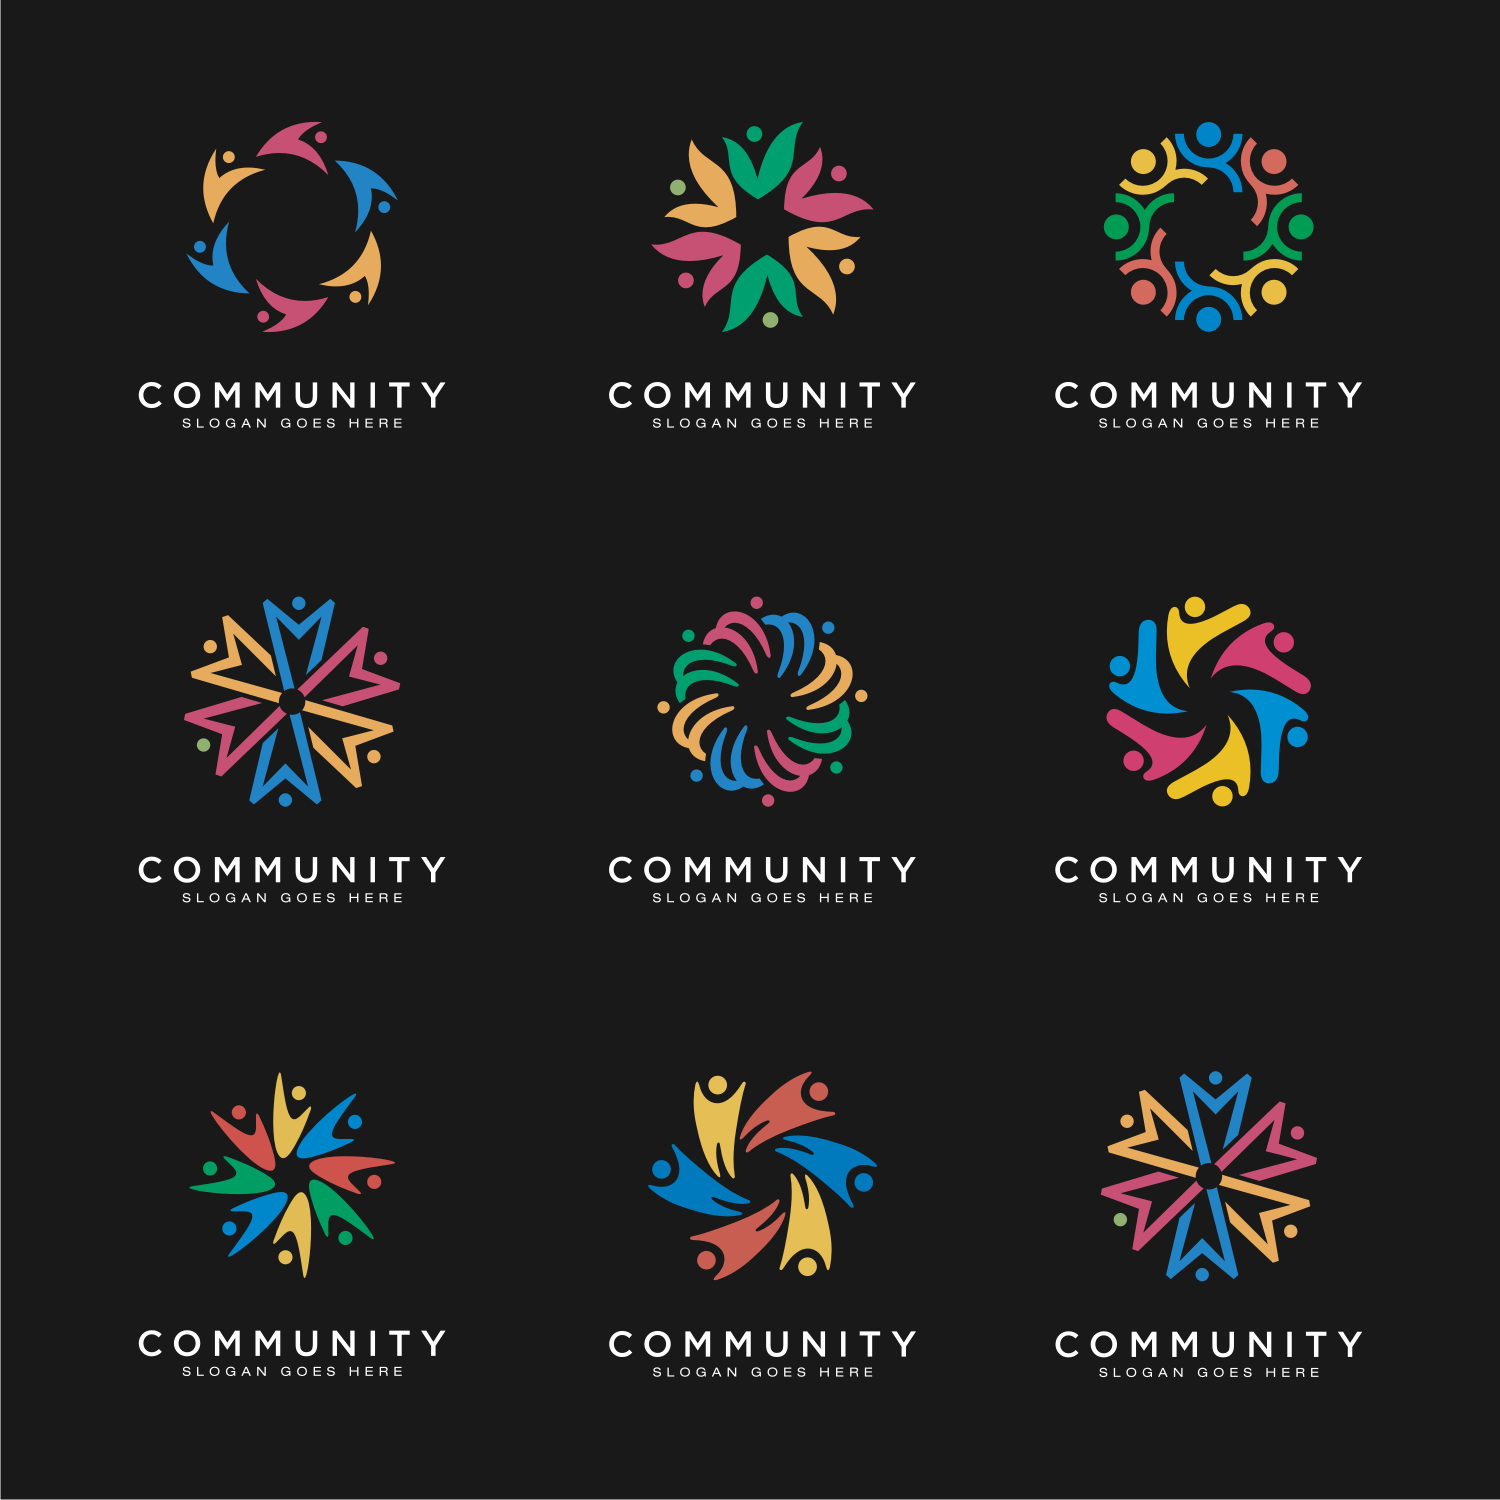 9 Teamwork People Community Logo Design preview image.